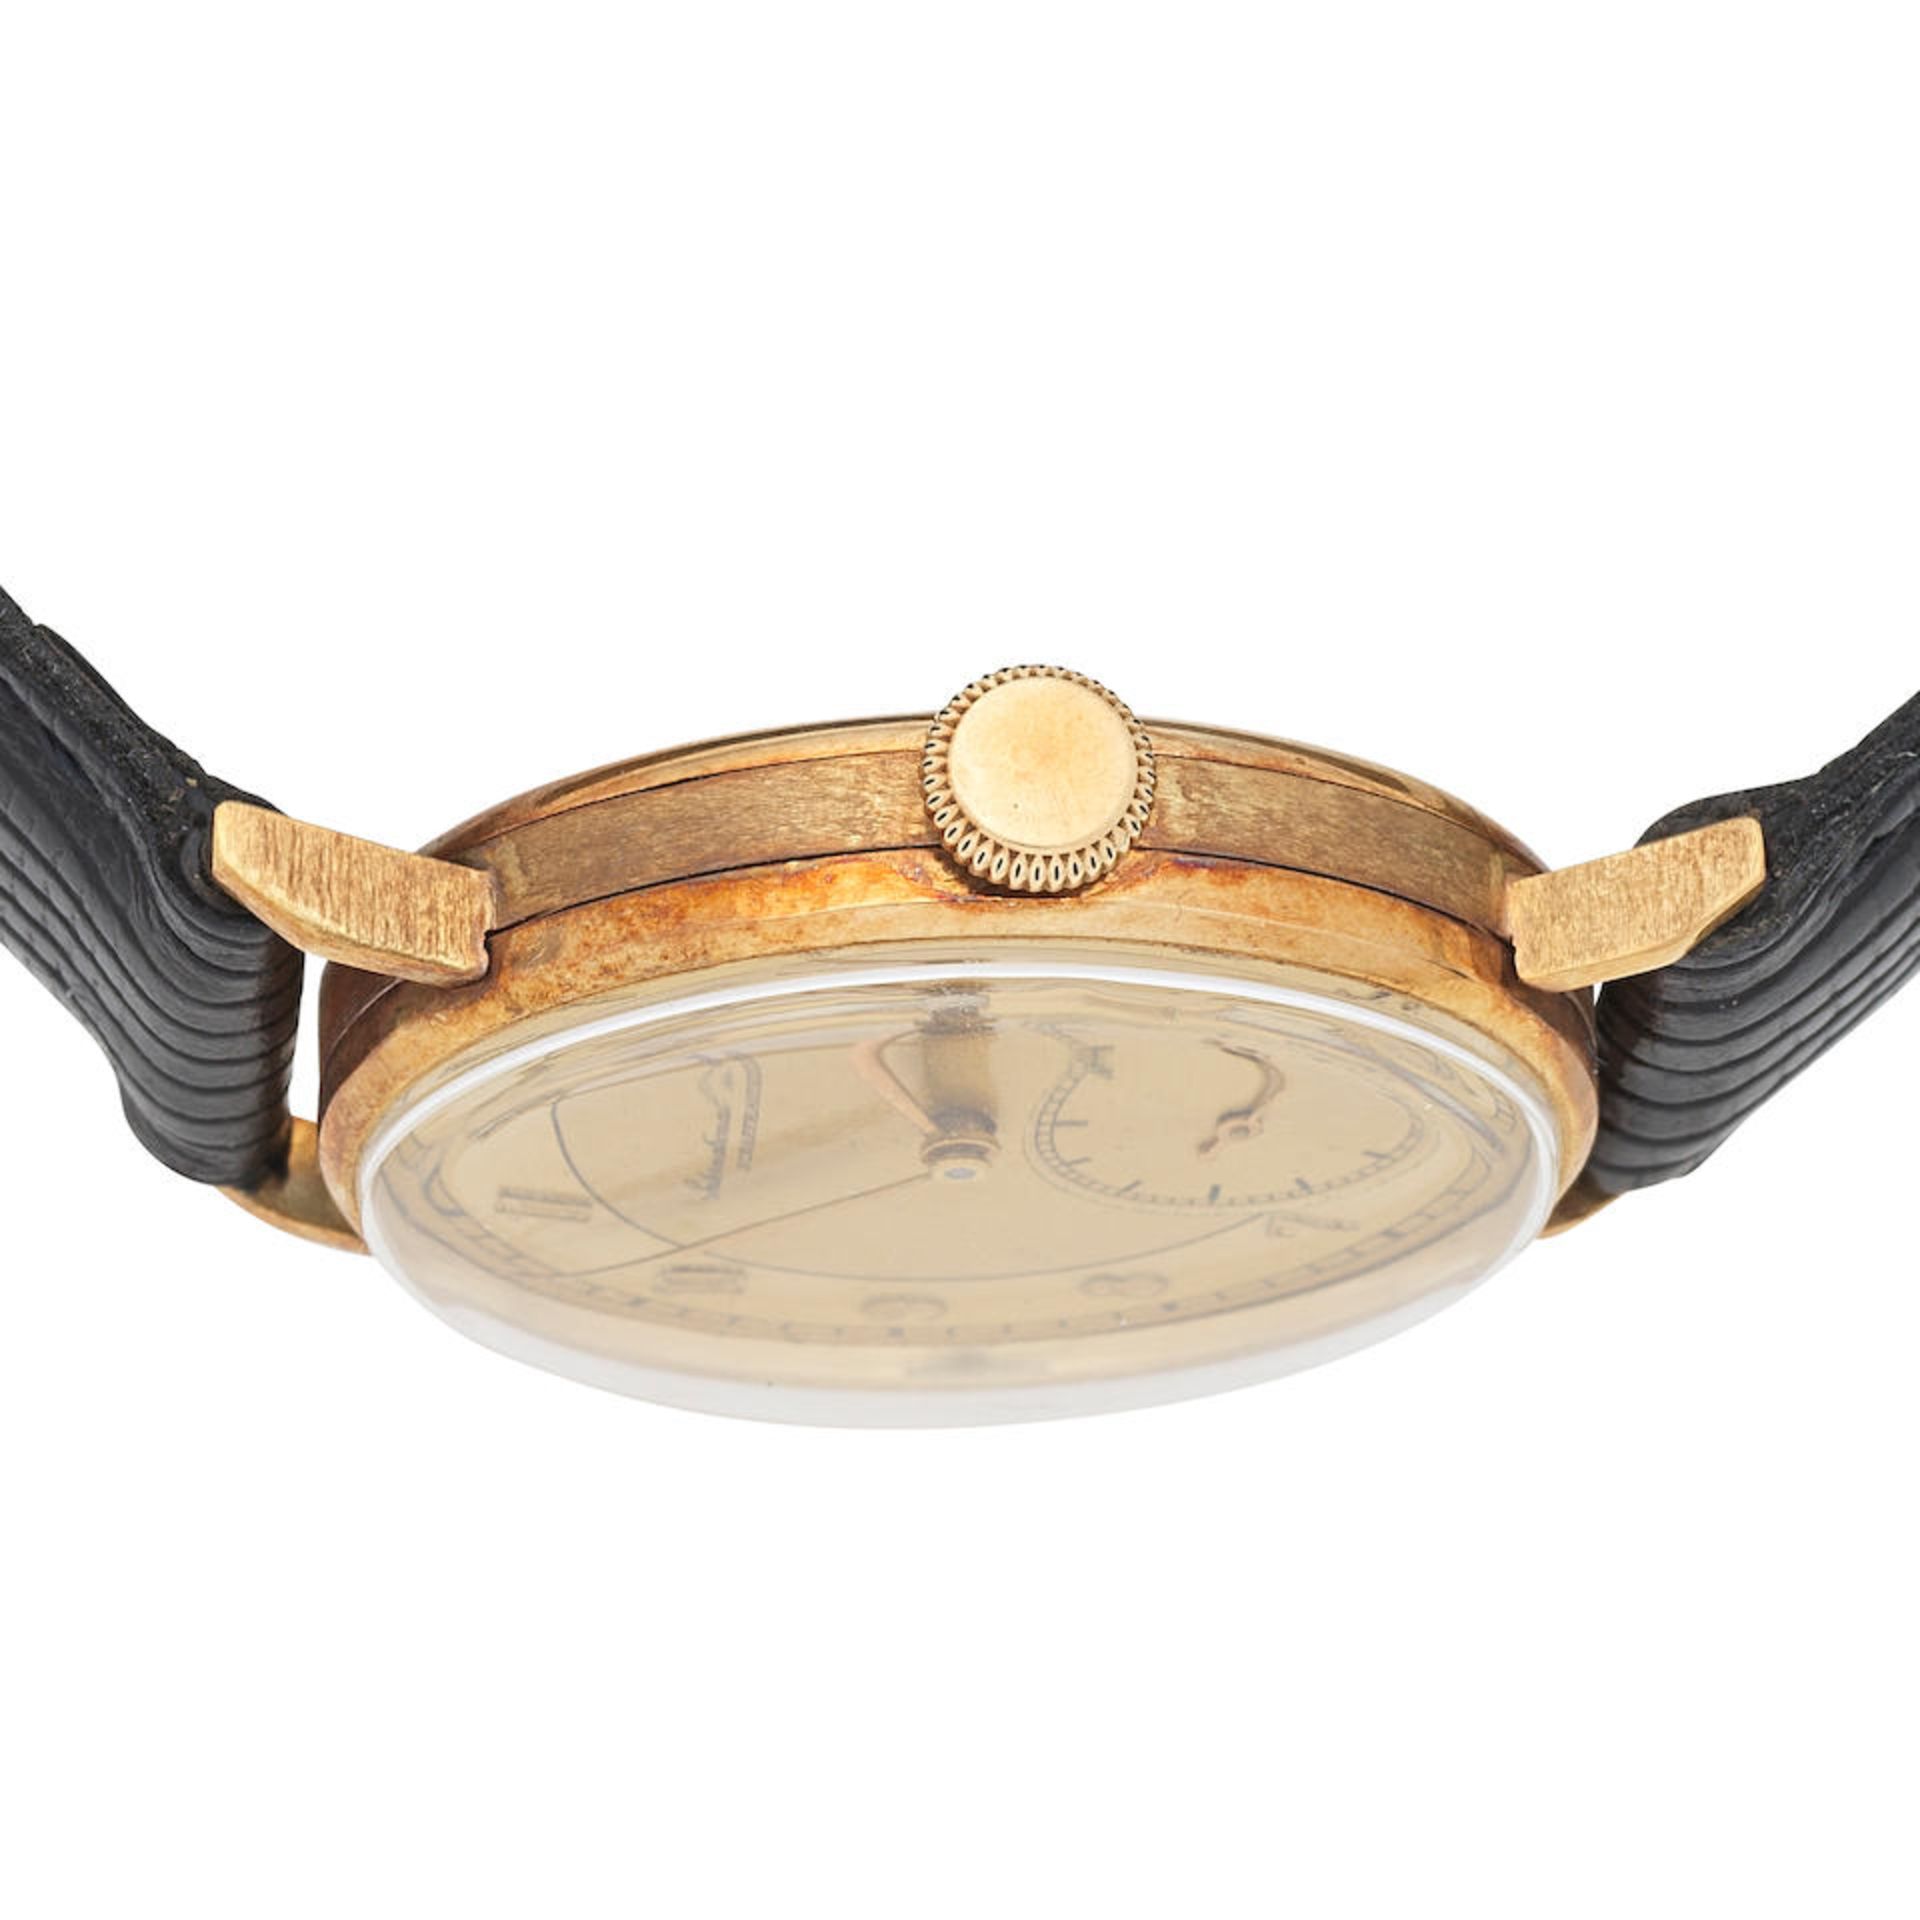 International Watch Company, Schaffhausen. A 14K gold manual wind wristwatch Circa 1940 - Image 3 of 5